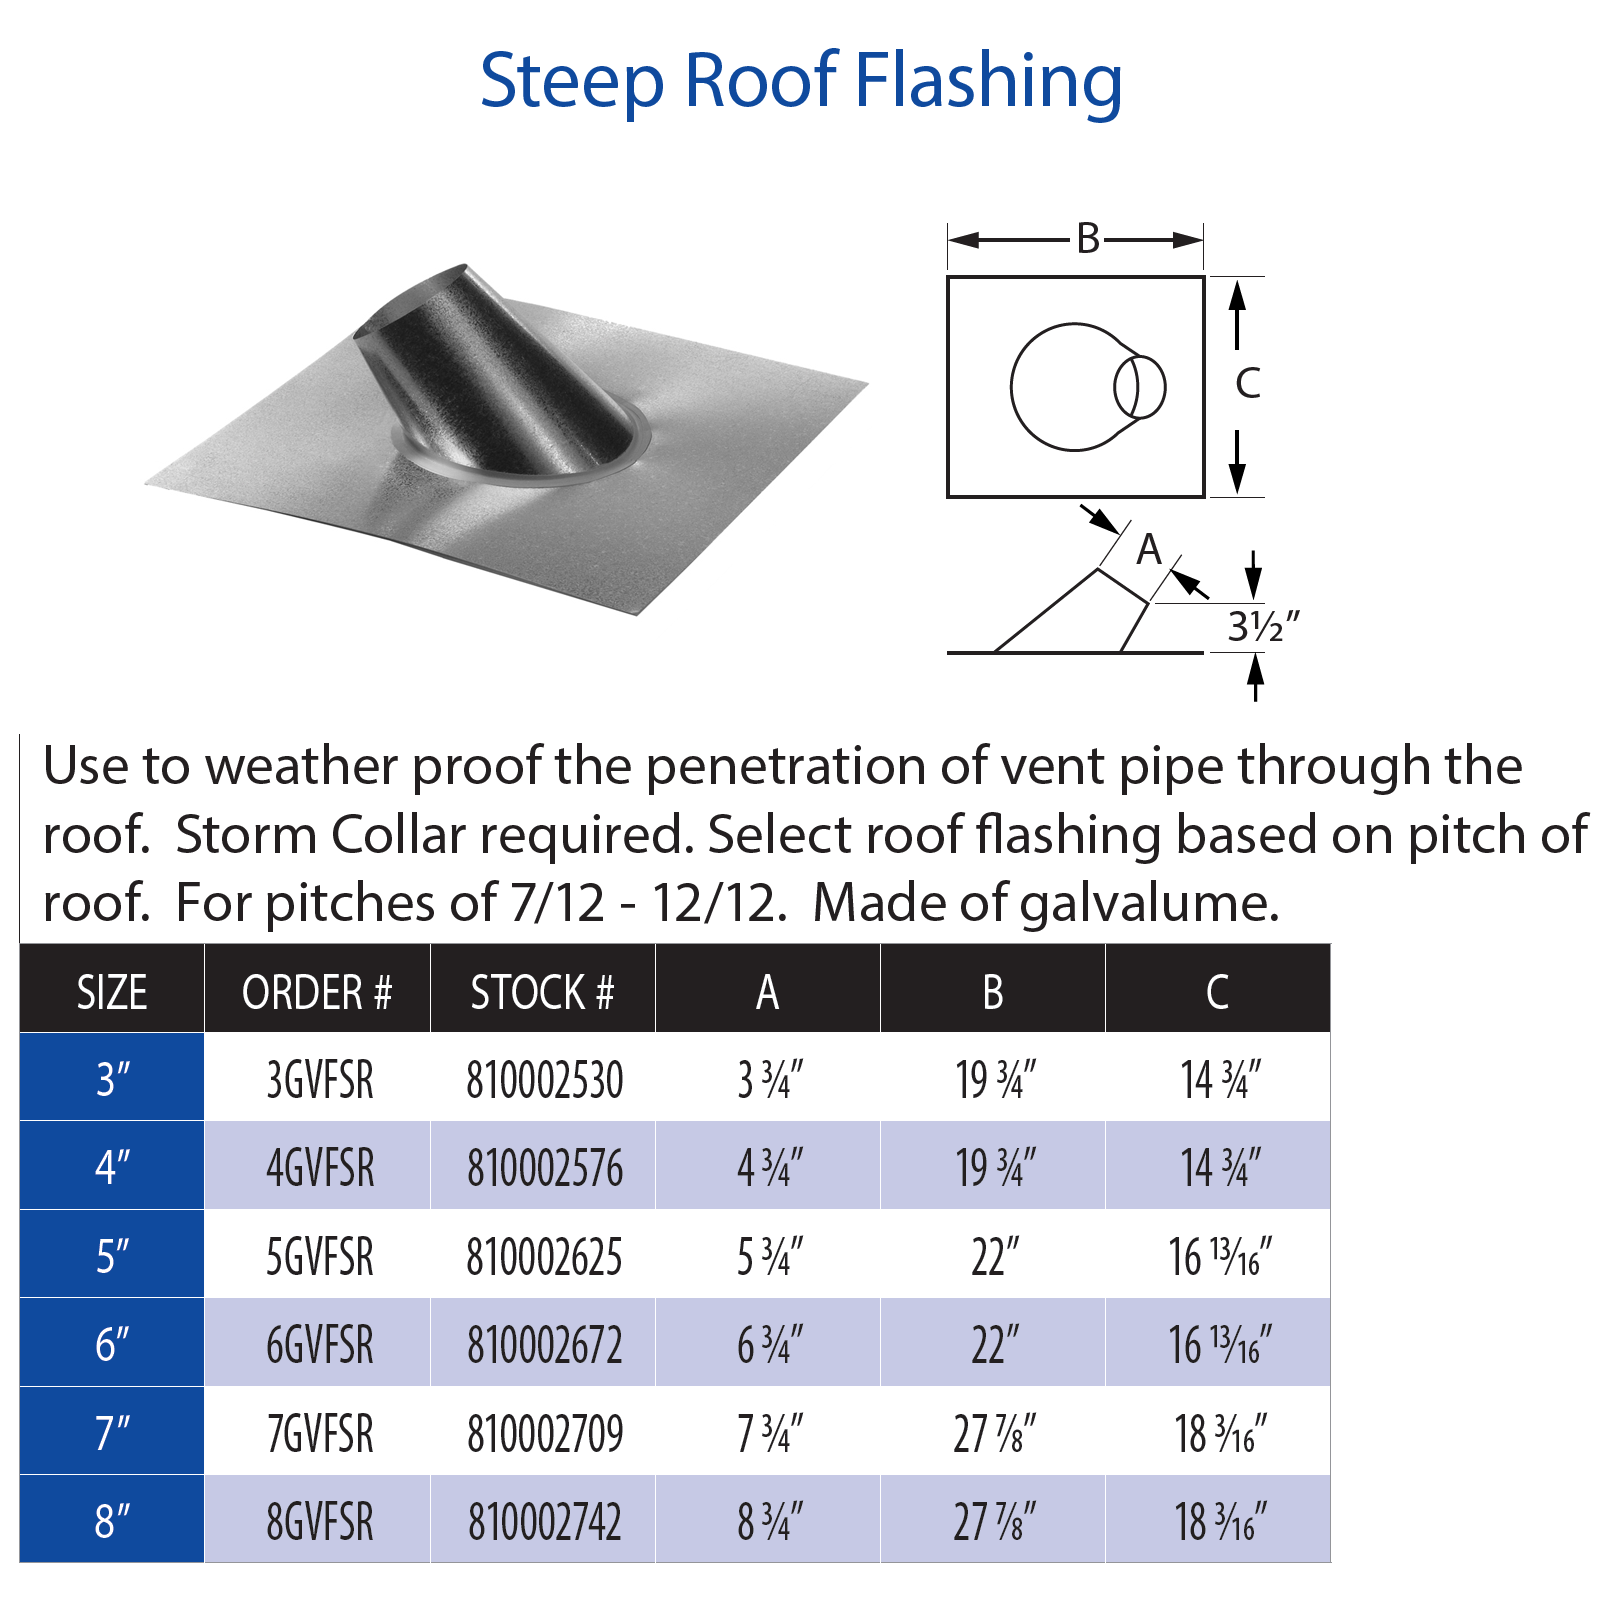 DuraVent Type B Steep Roof Flashing | 6GVFSR